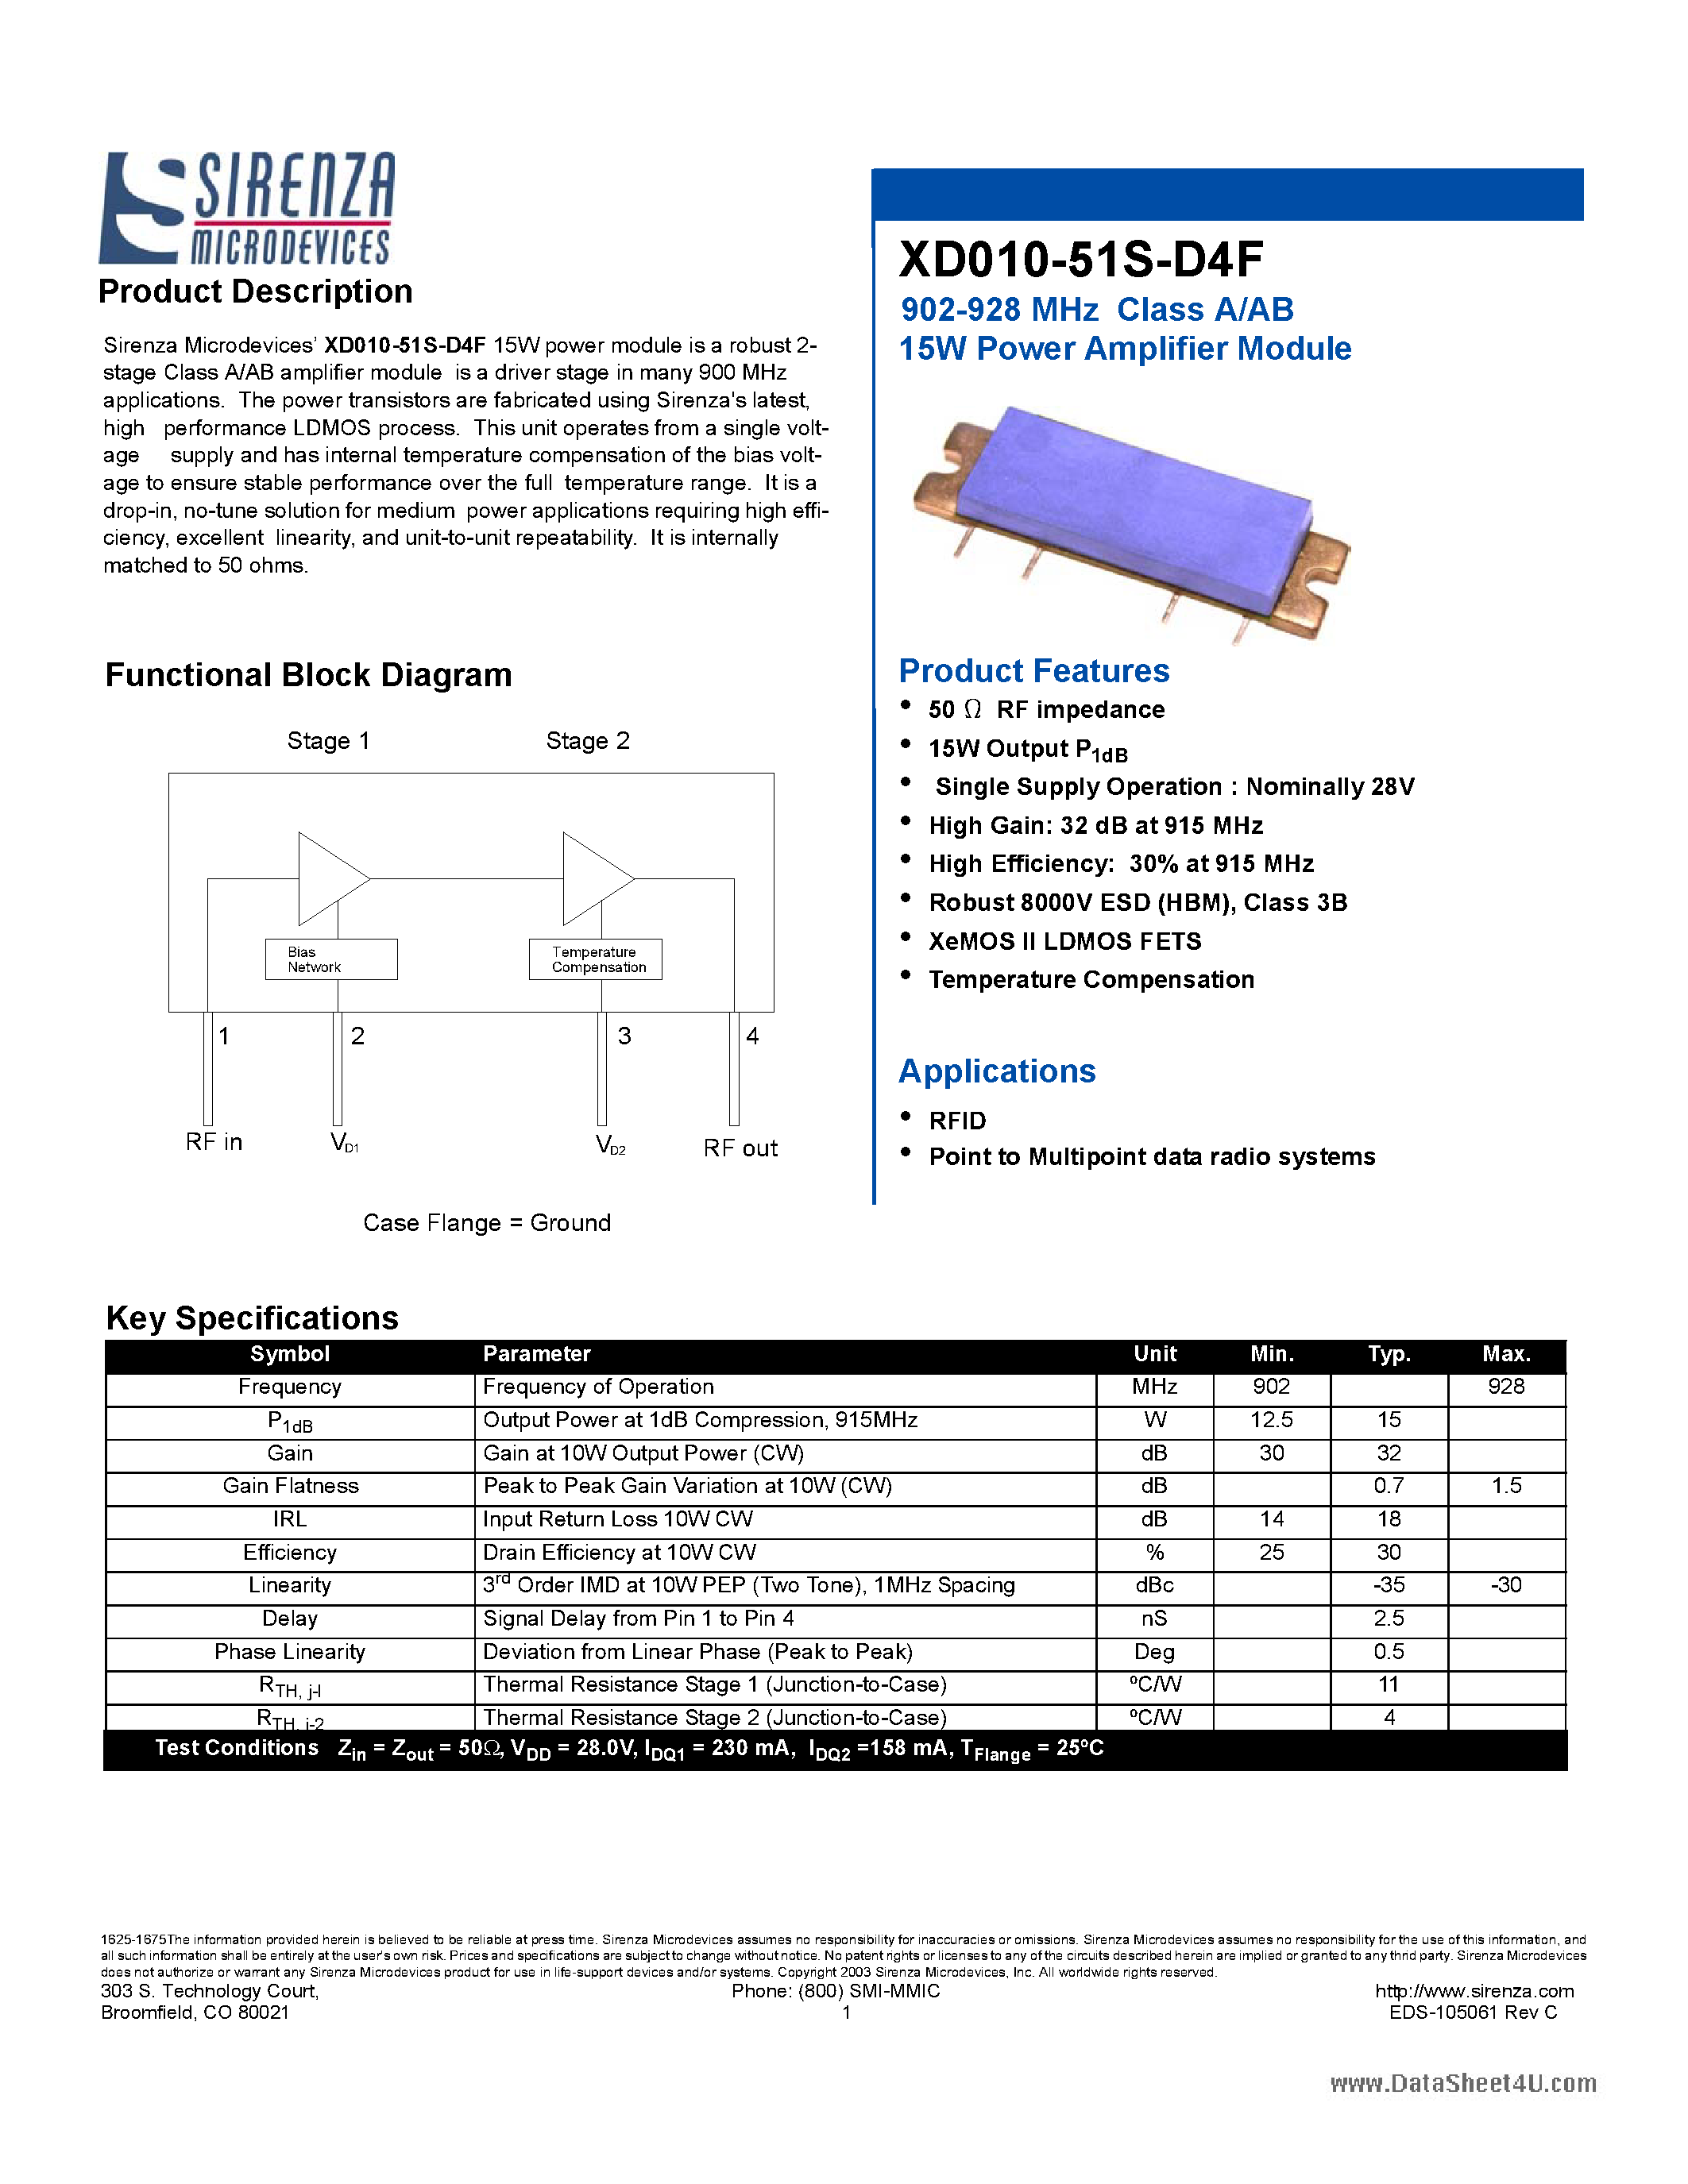 Datasheet XD010-51S-D4F - Class A/AB 15W Power Amplifier Module page 1